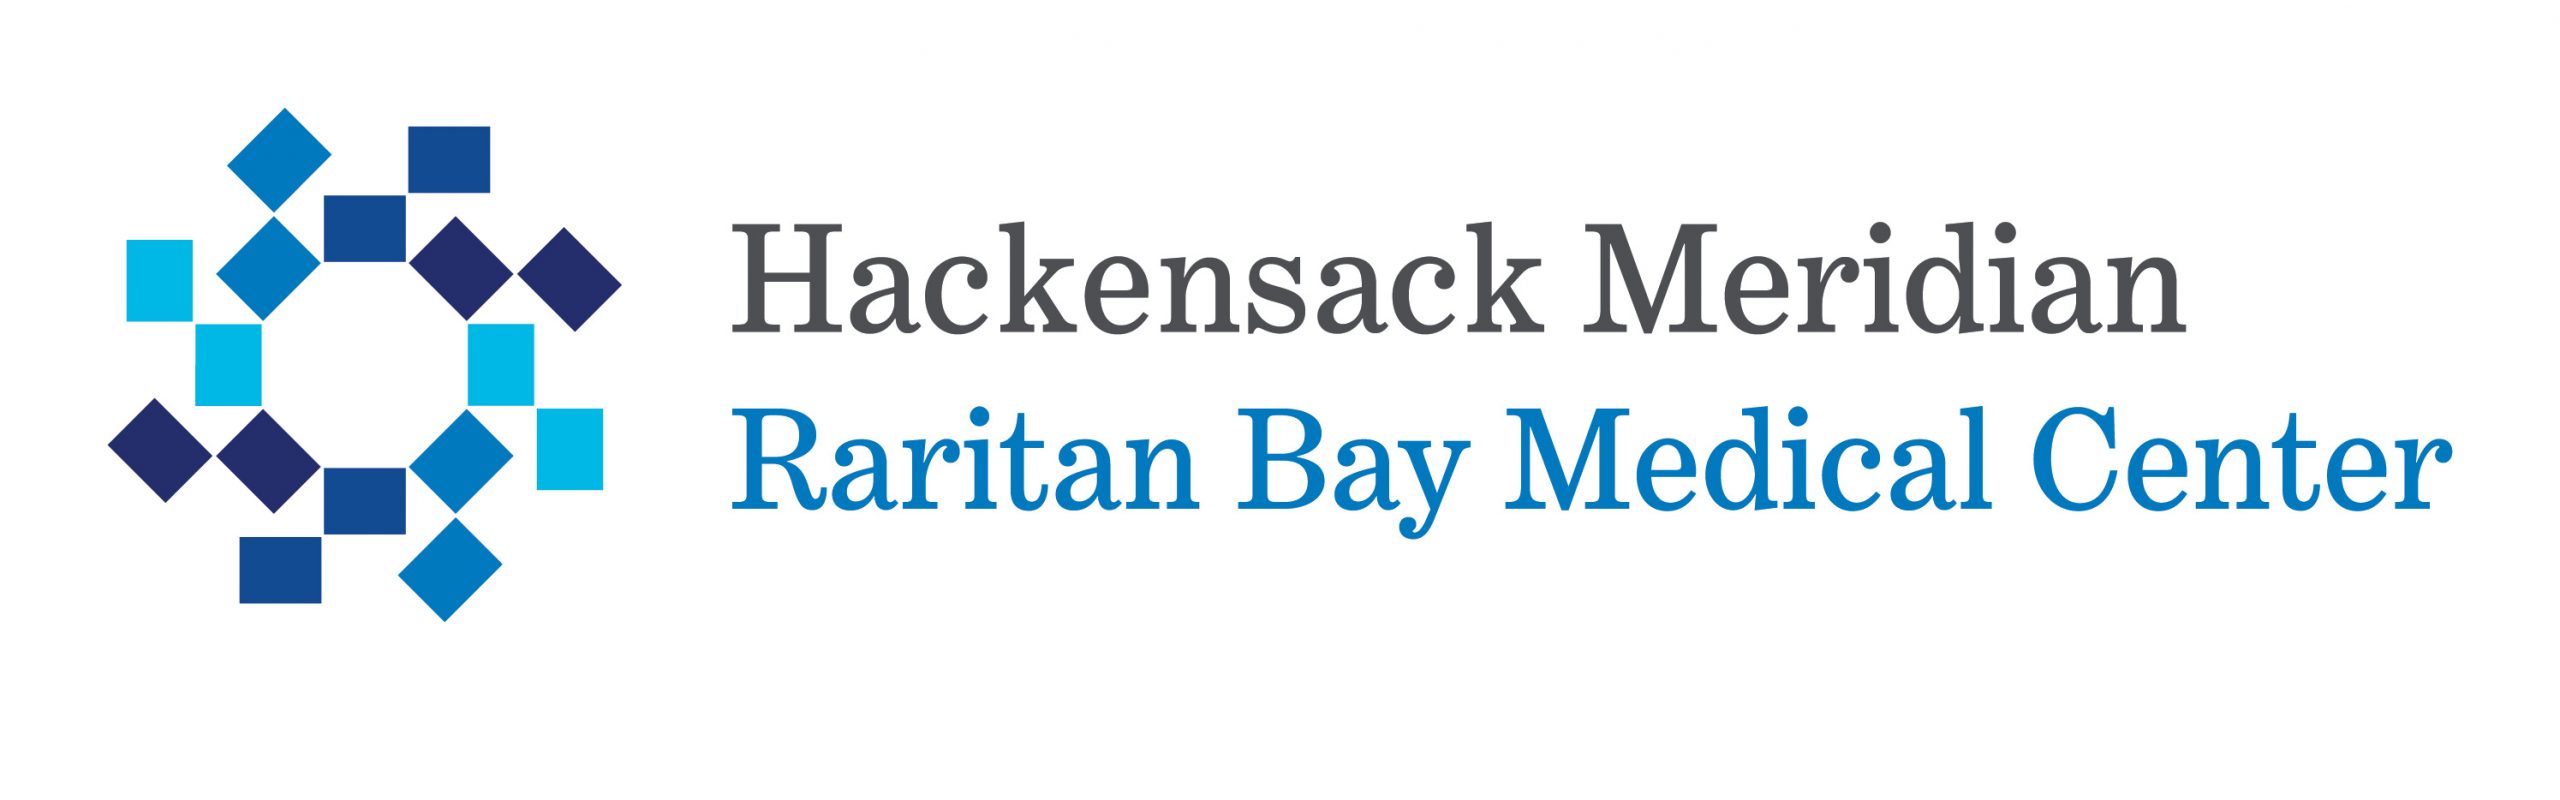 Hackensack Meridian Raritan Bay Medical Center